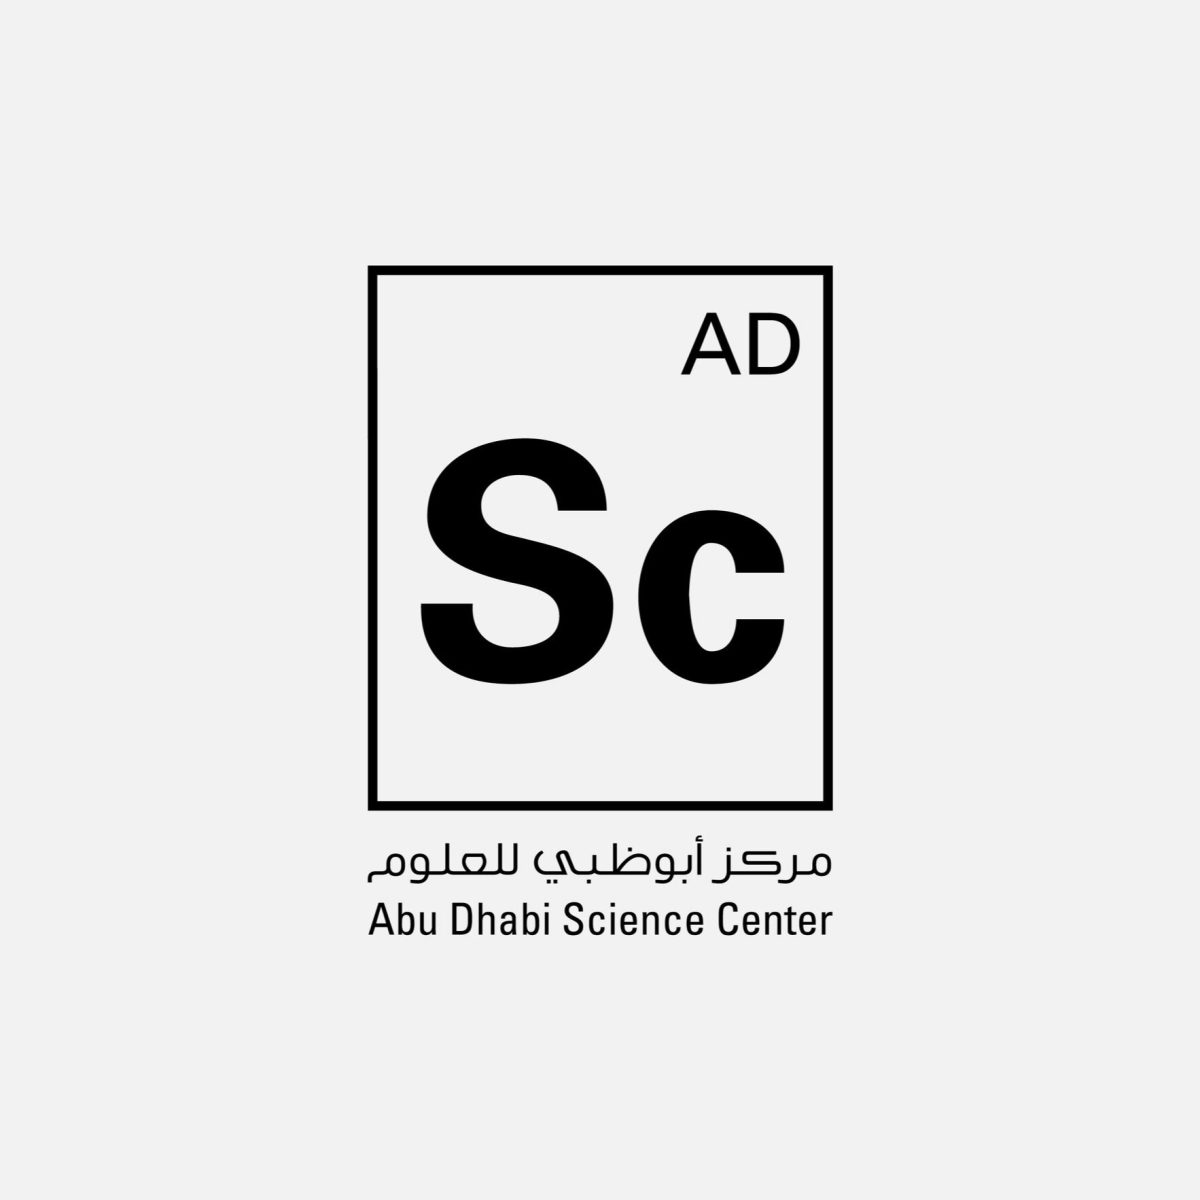 Abu Dhabi Science Center